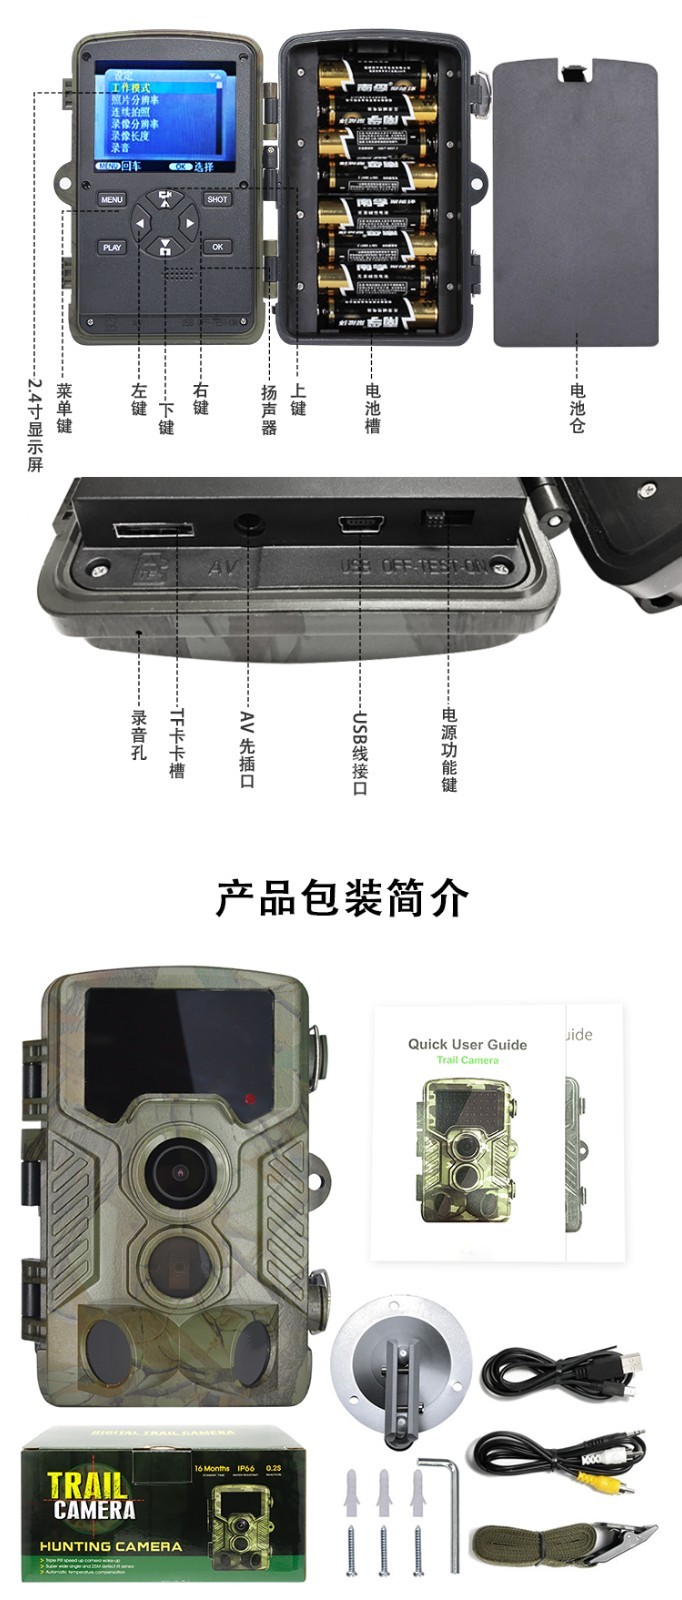 H881 PLUS红外相机 产品包装简介.jpg